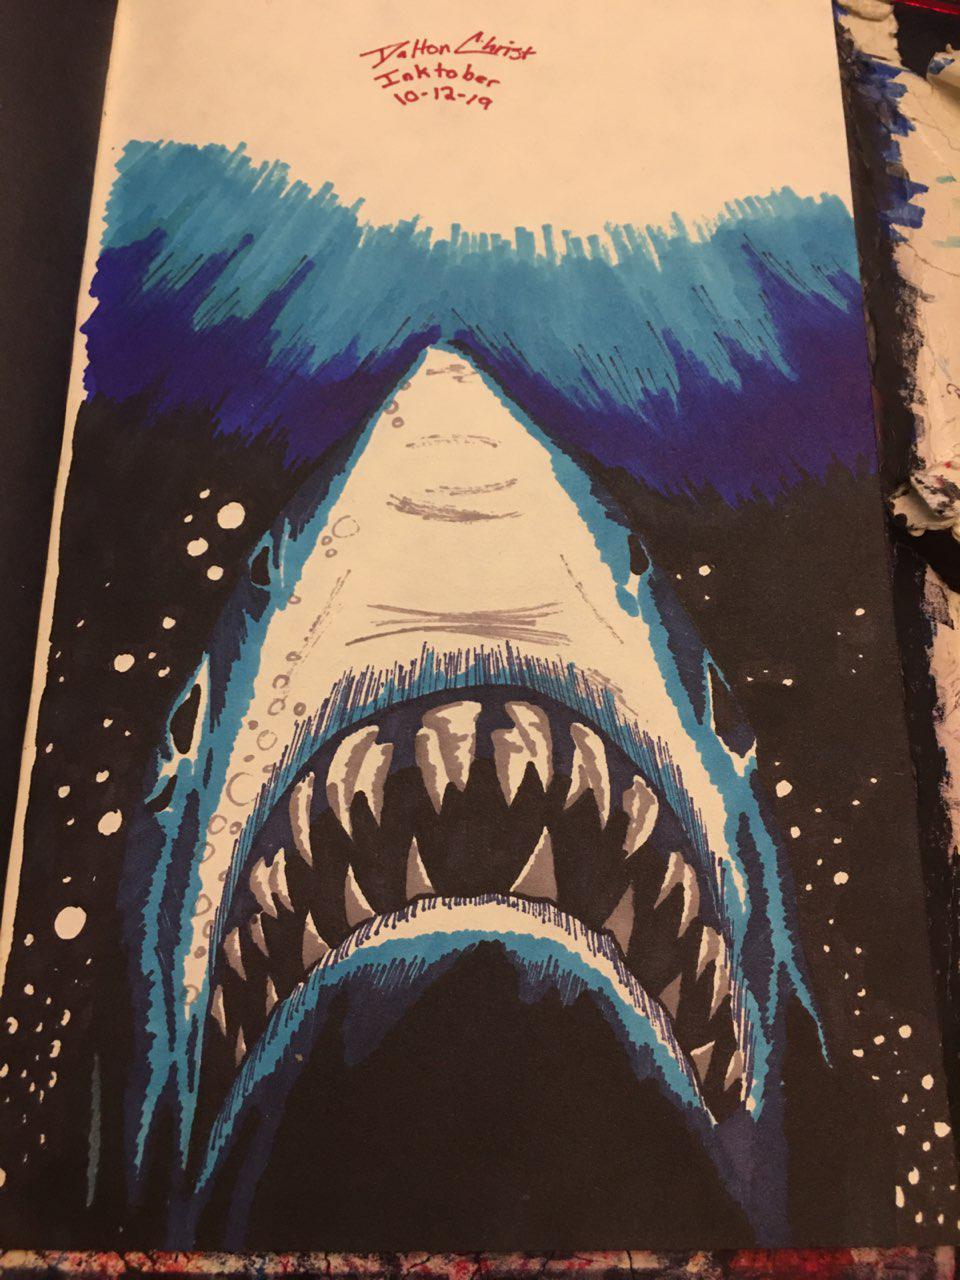 JAWS (Inktober 2019, Day 12)